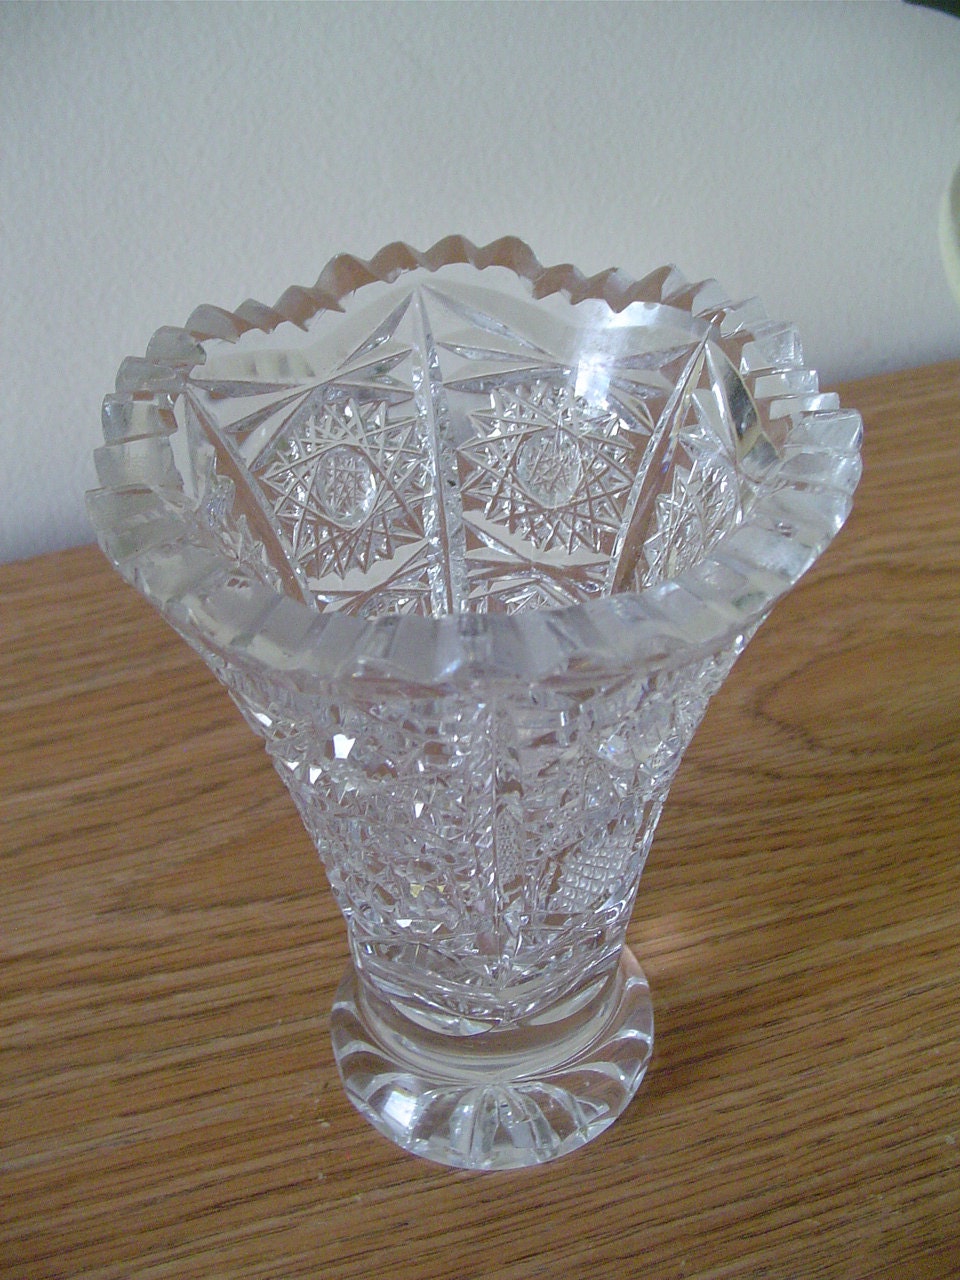 Lead Crystal Glass Vase Antique Lead Crystal Cut Glass Vase